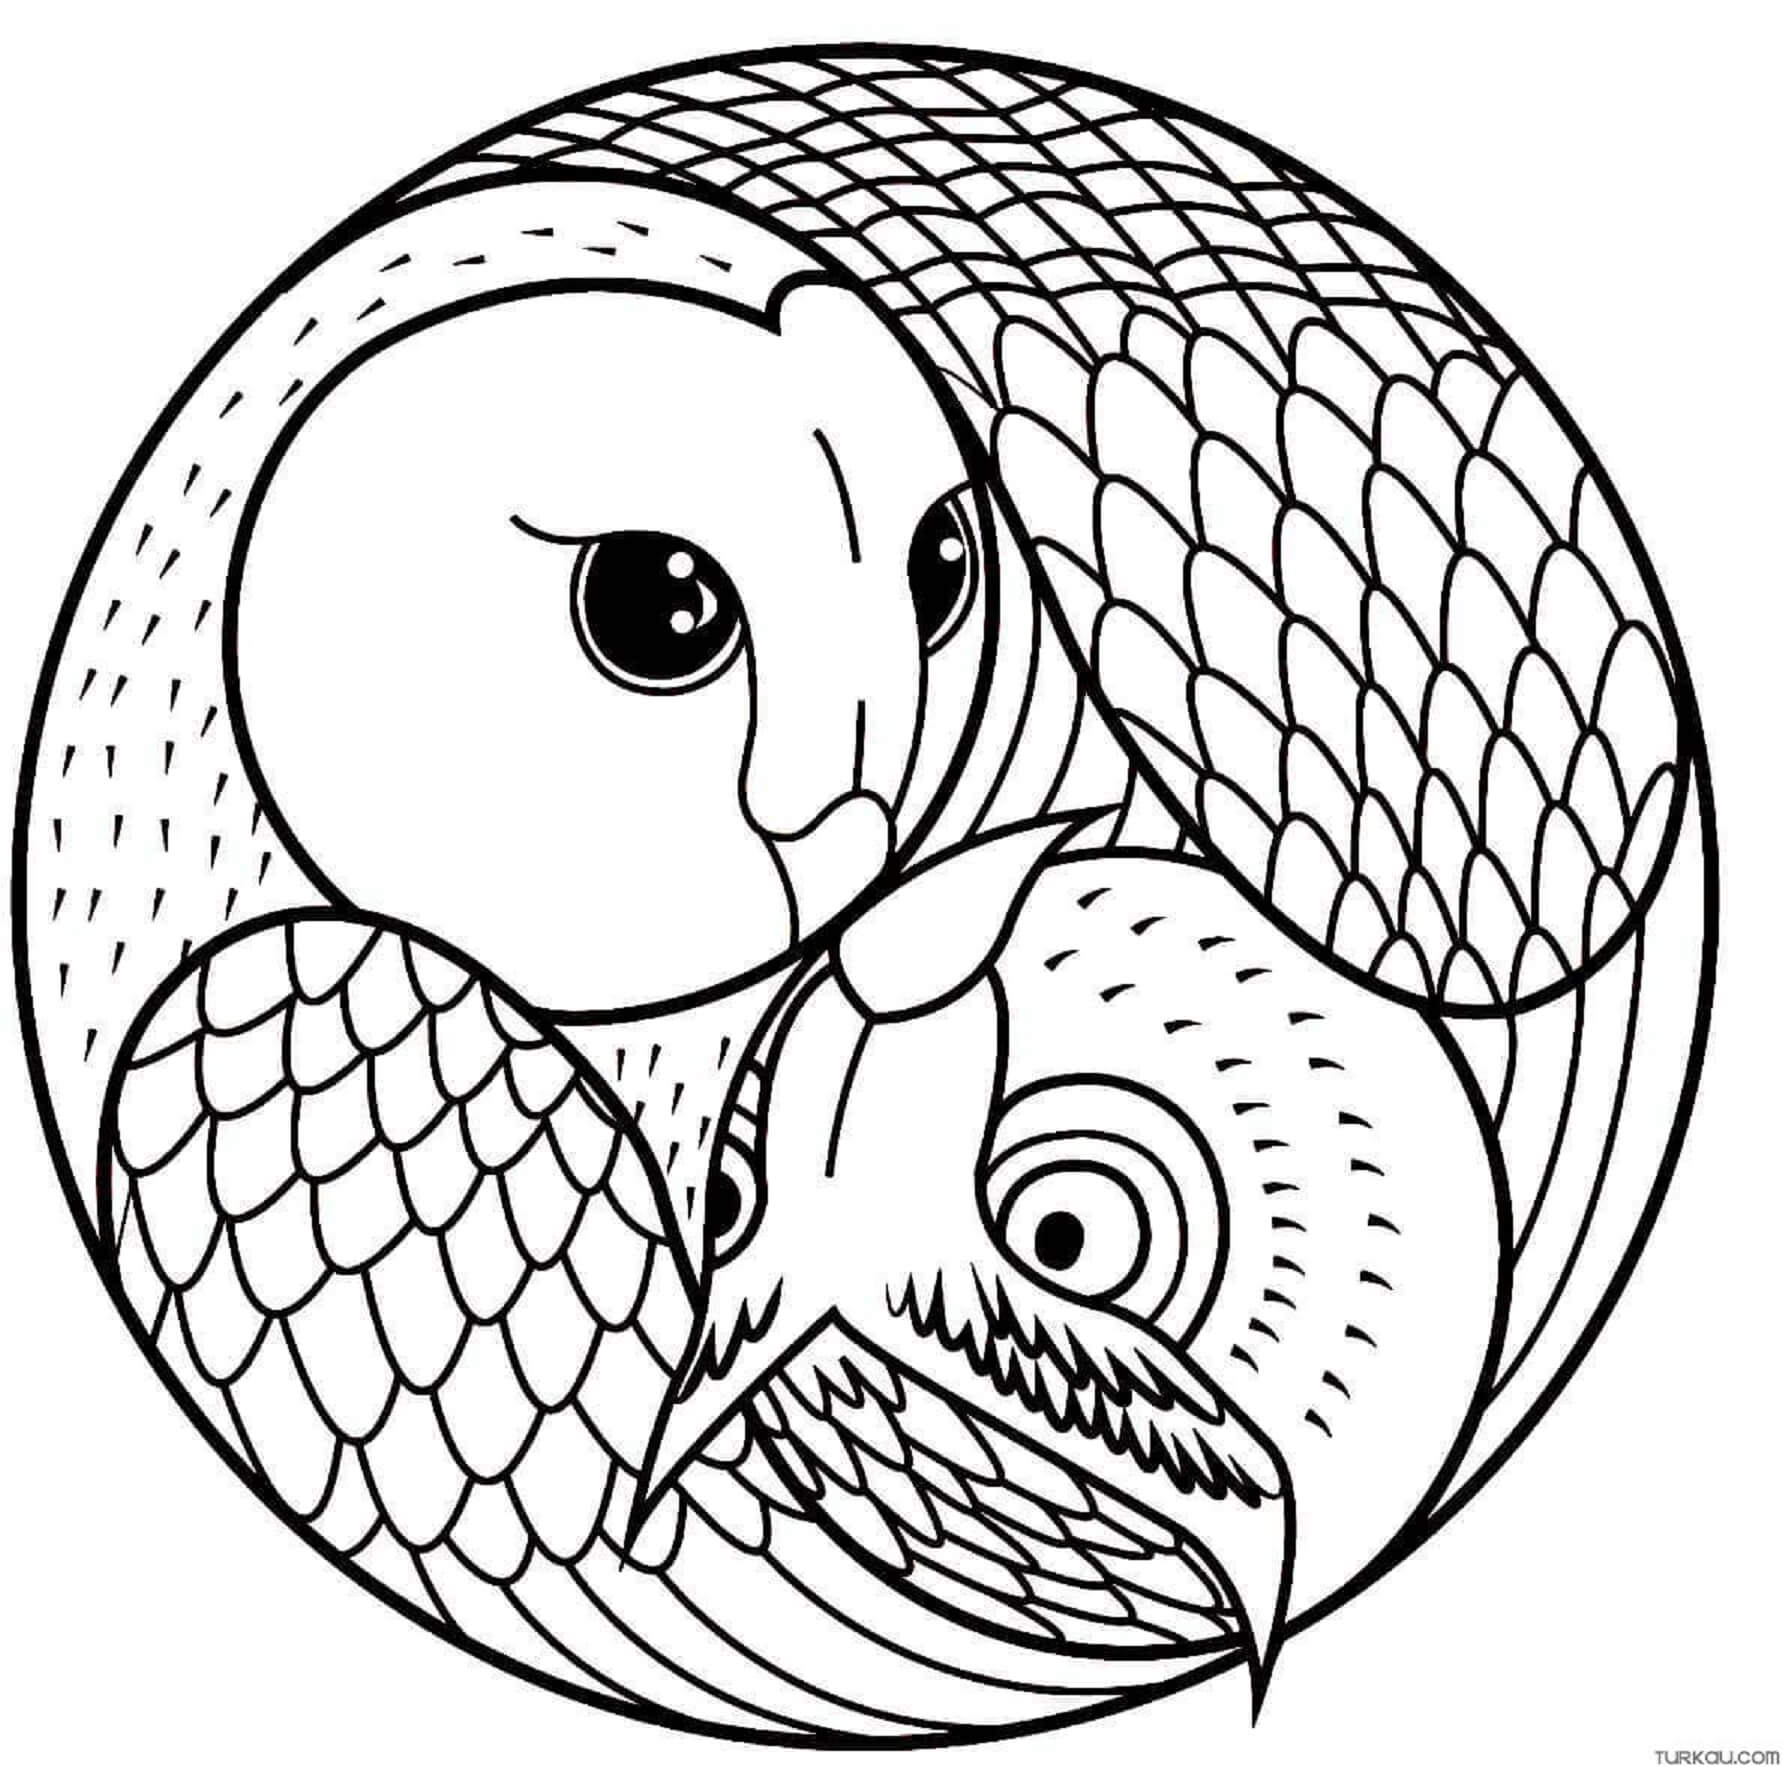 Mandala Owl Coloring Page Mandalas